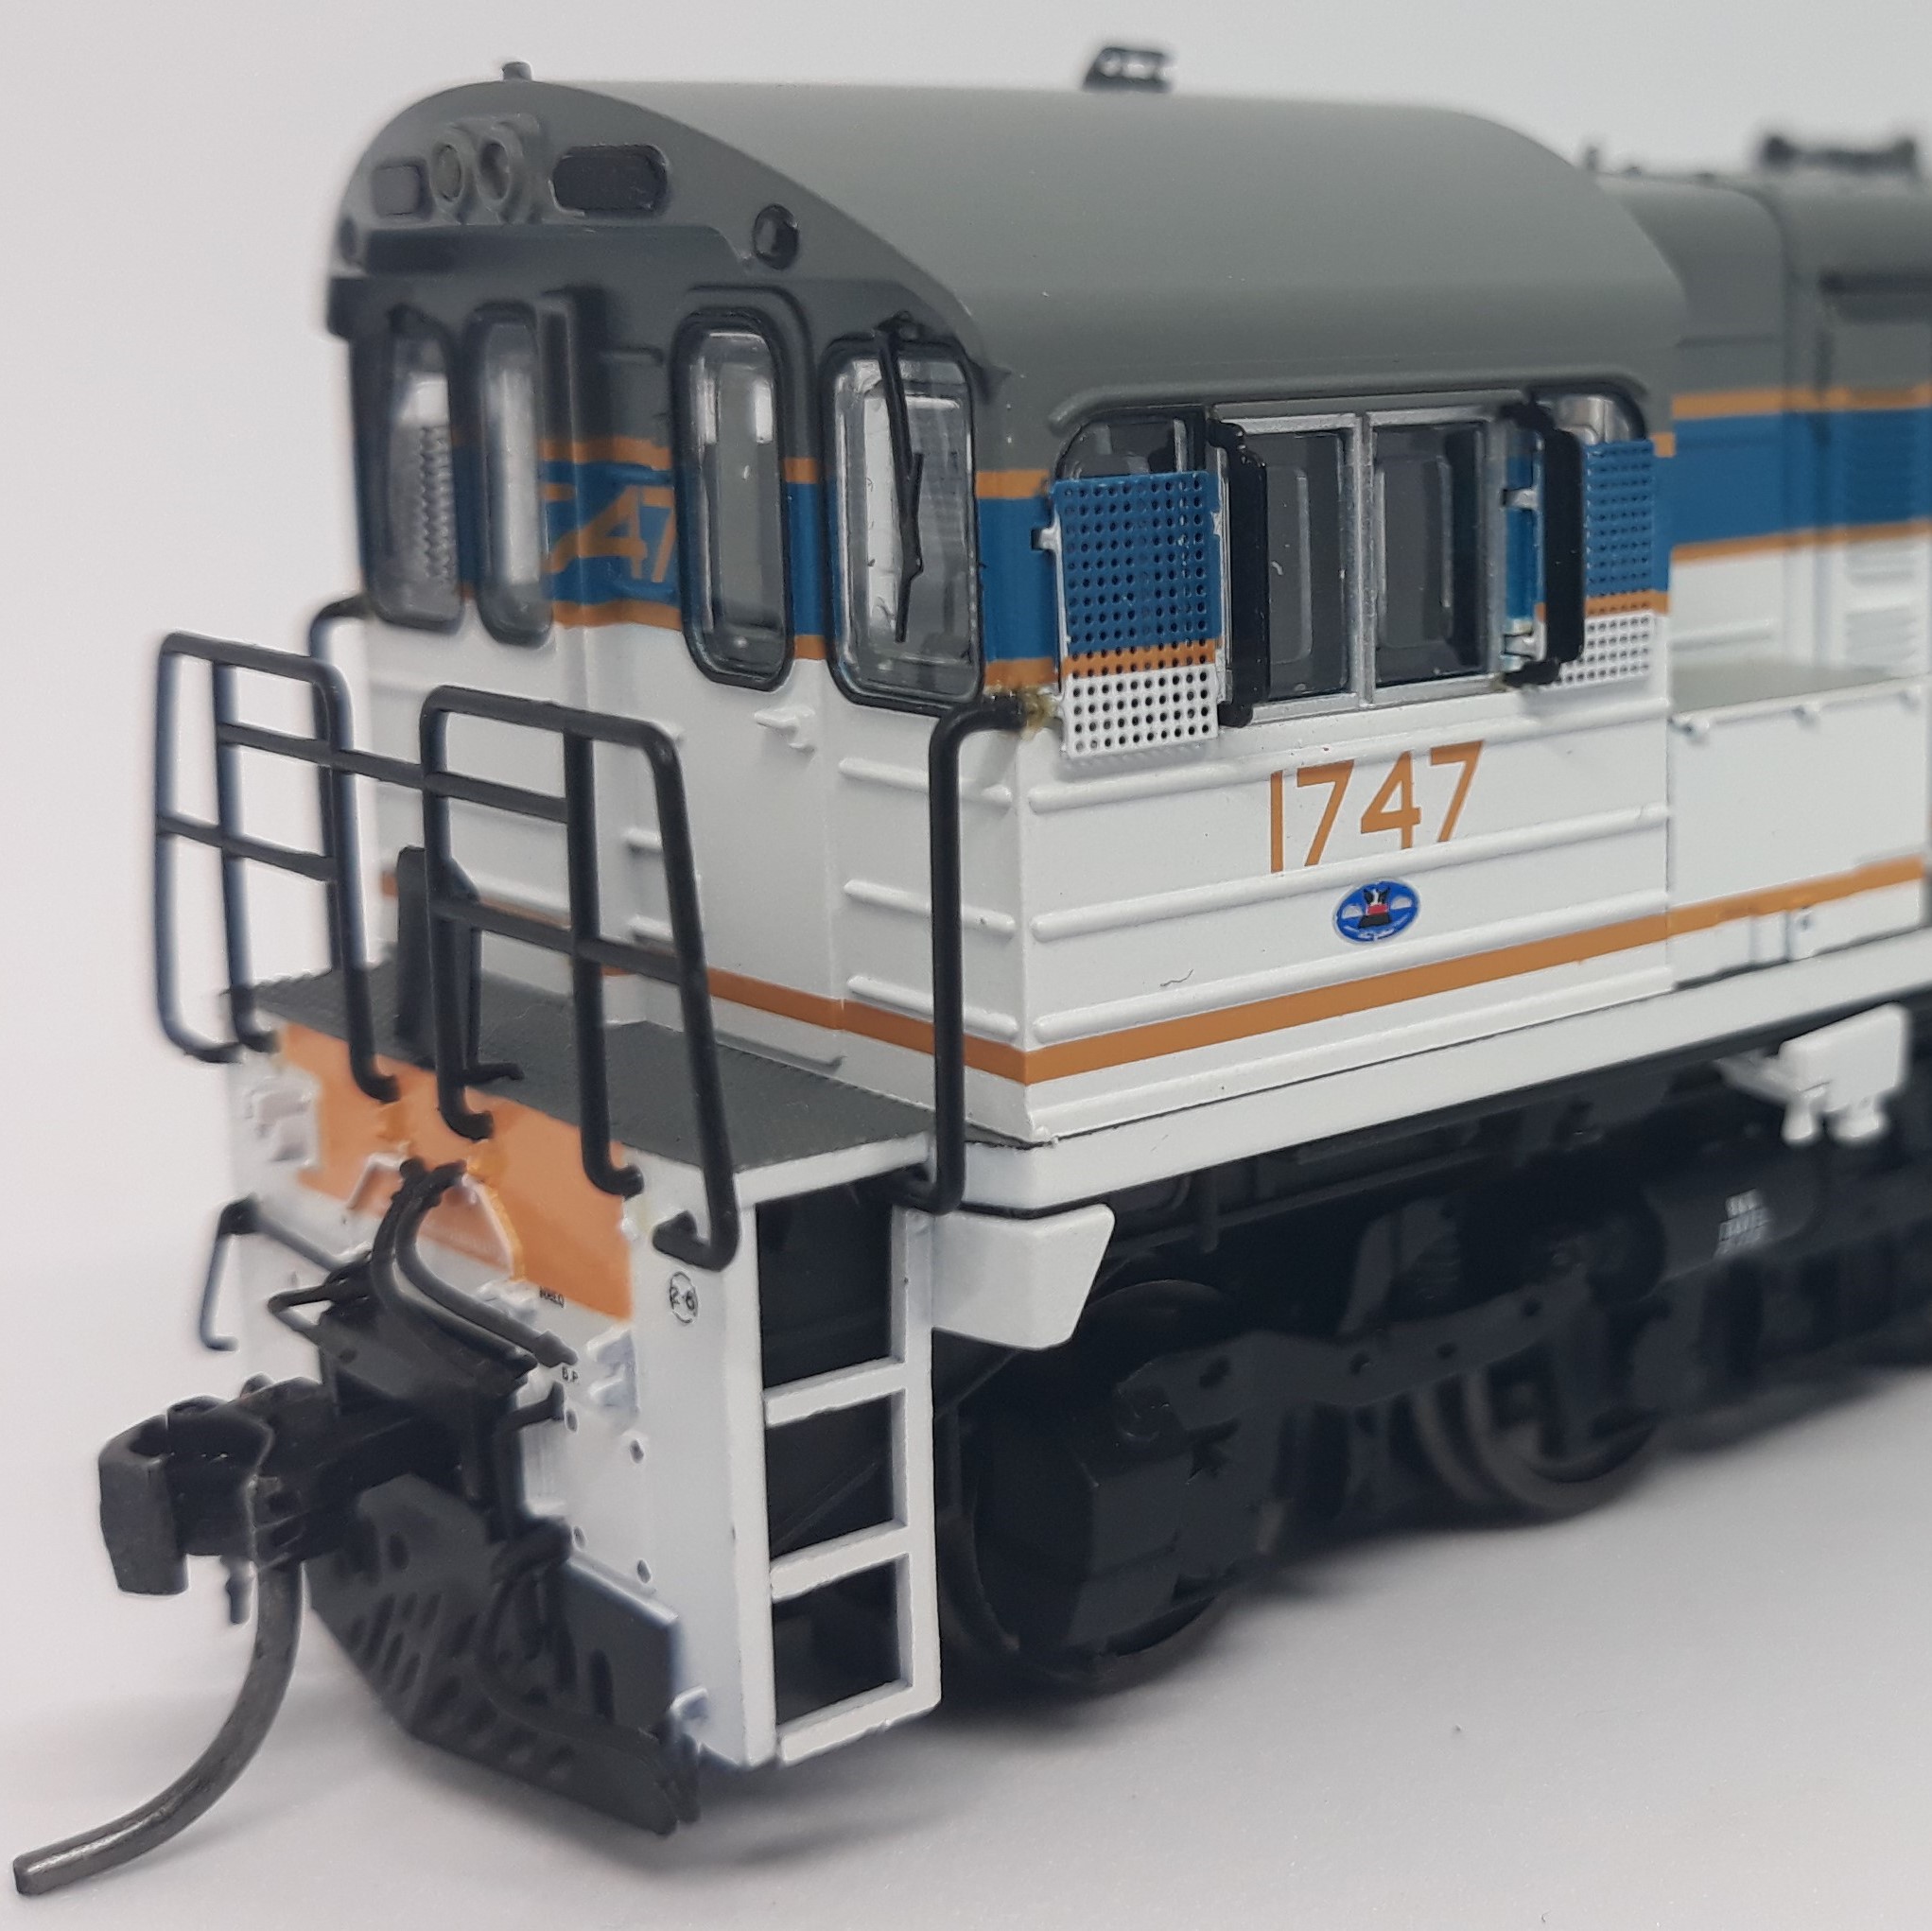 RTR044HO 1720 Class Locomotive #1747 HO (16.5mm Gauge)